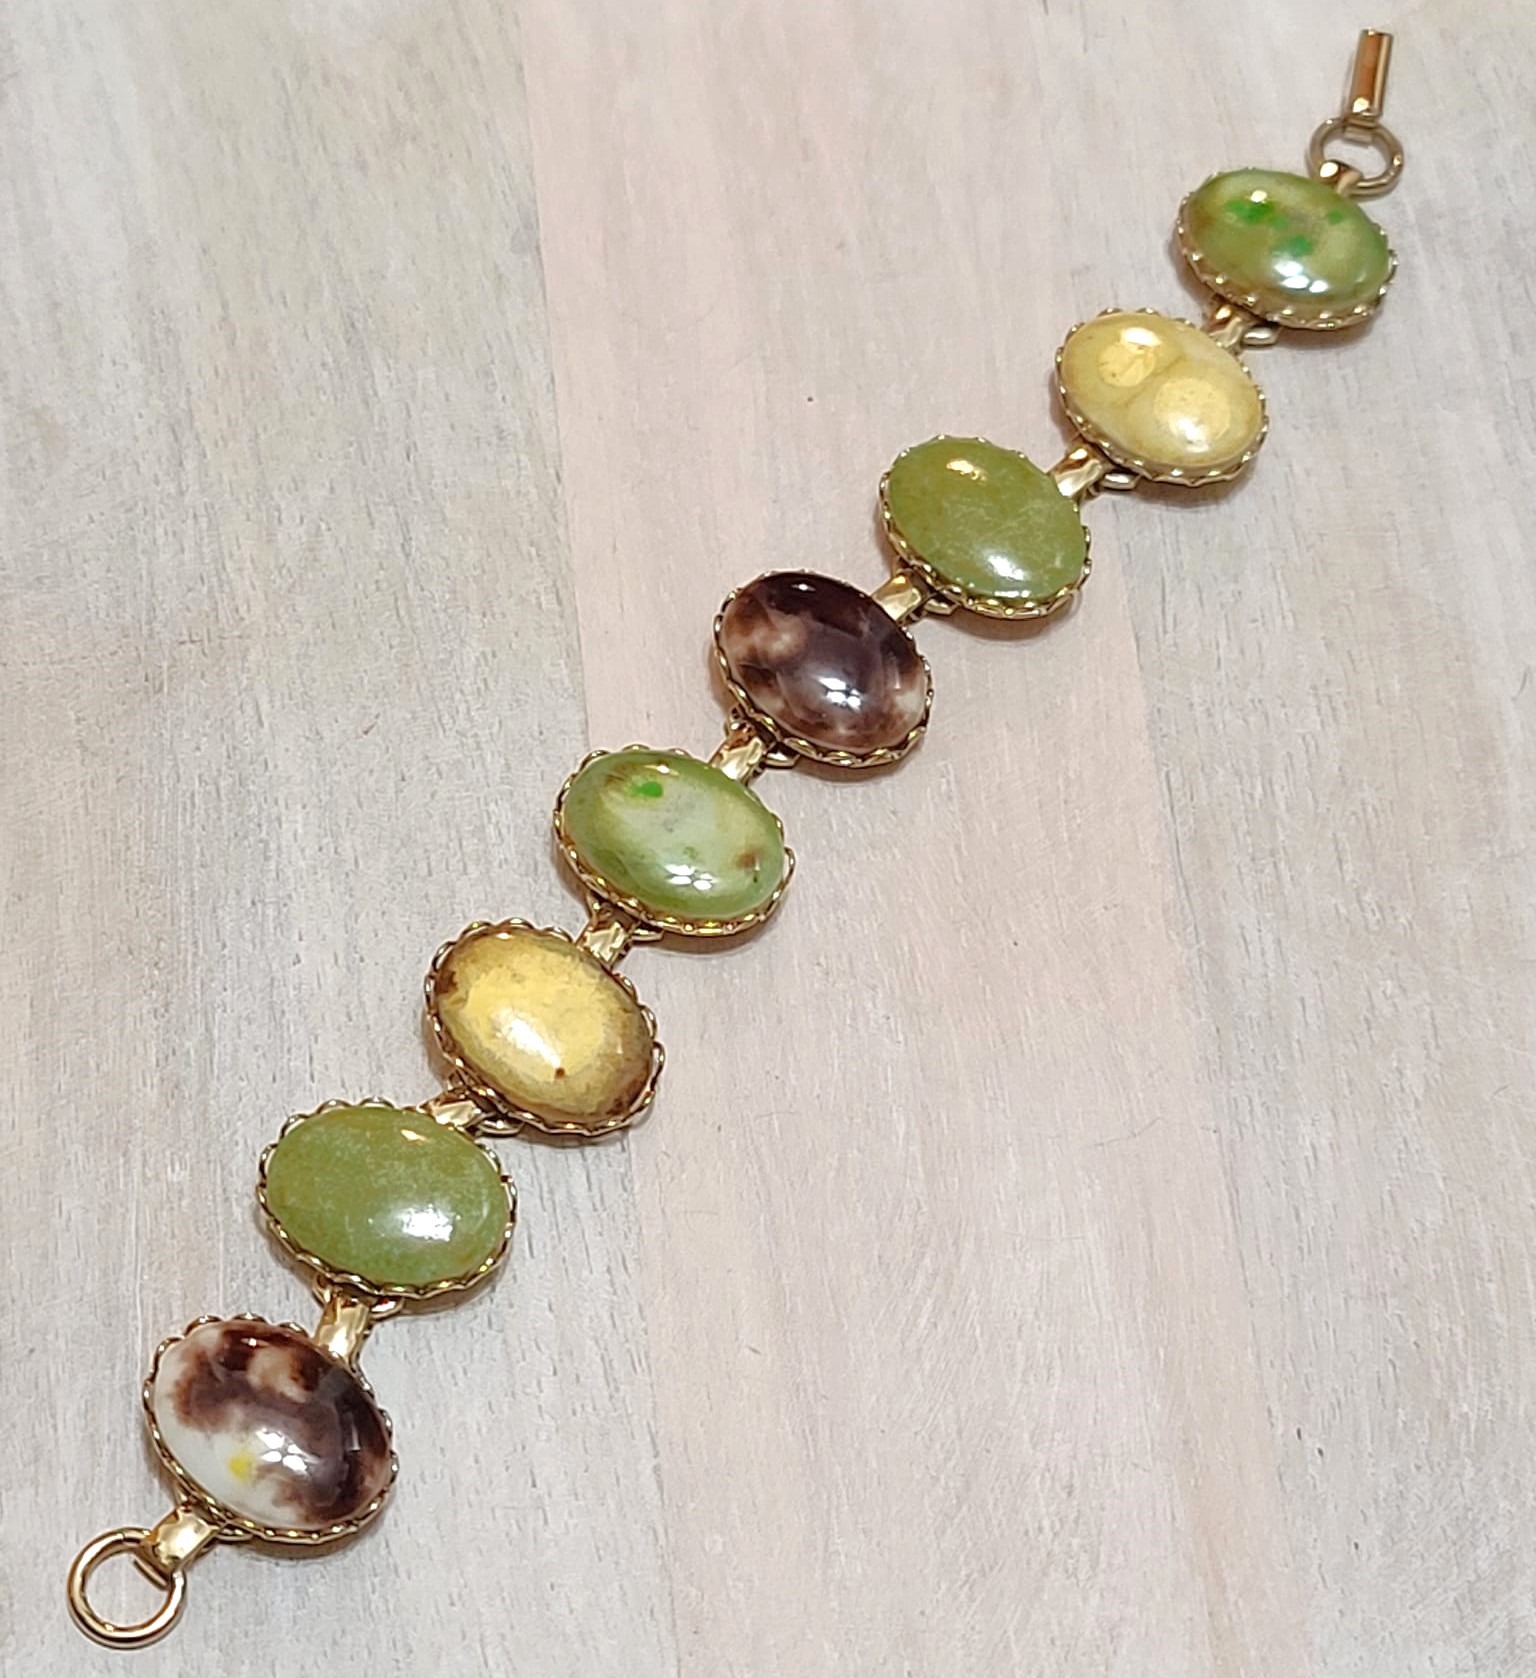 Stone link bracelet, vintage, brown, green and beige hues